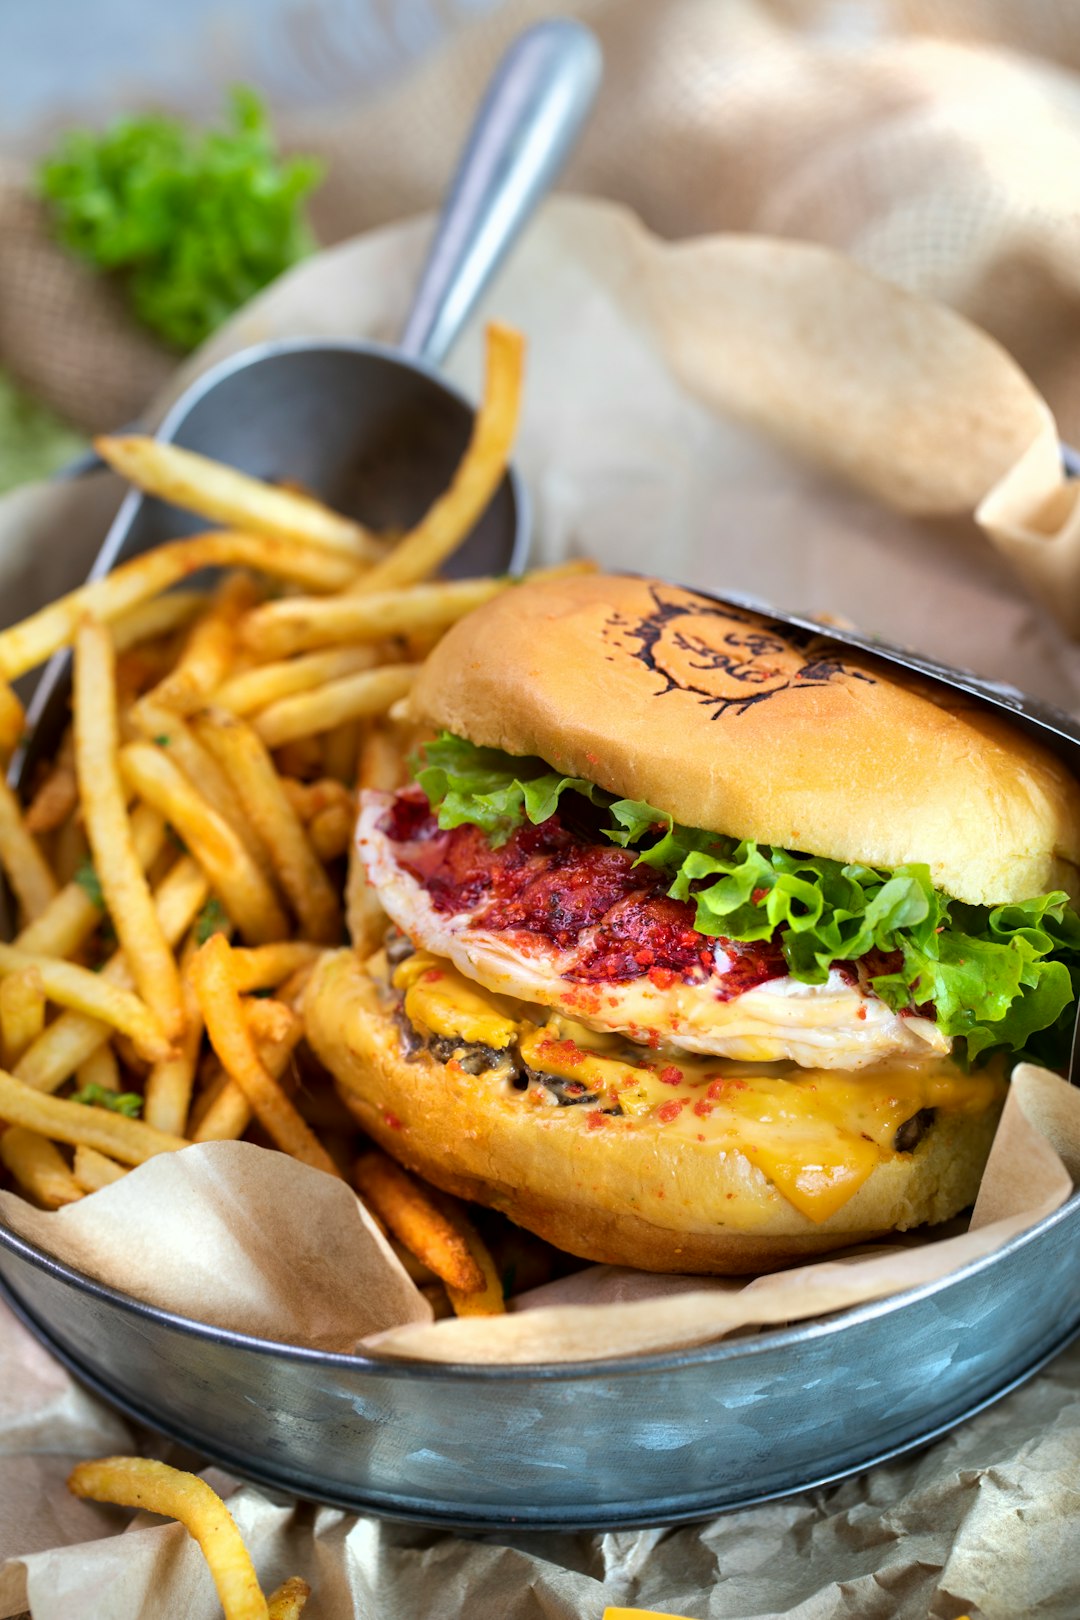 hamburger and fries on gray plate